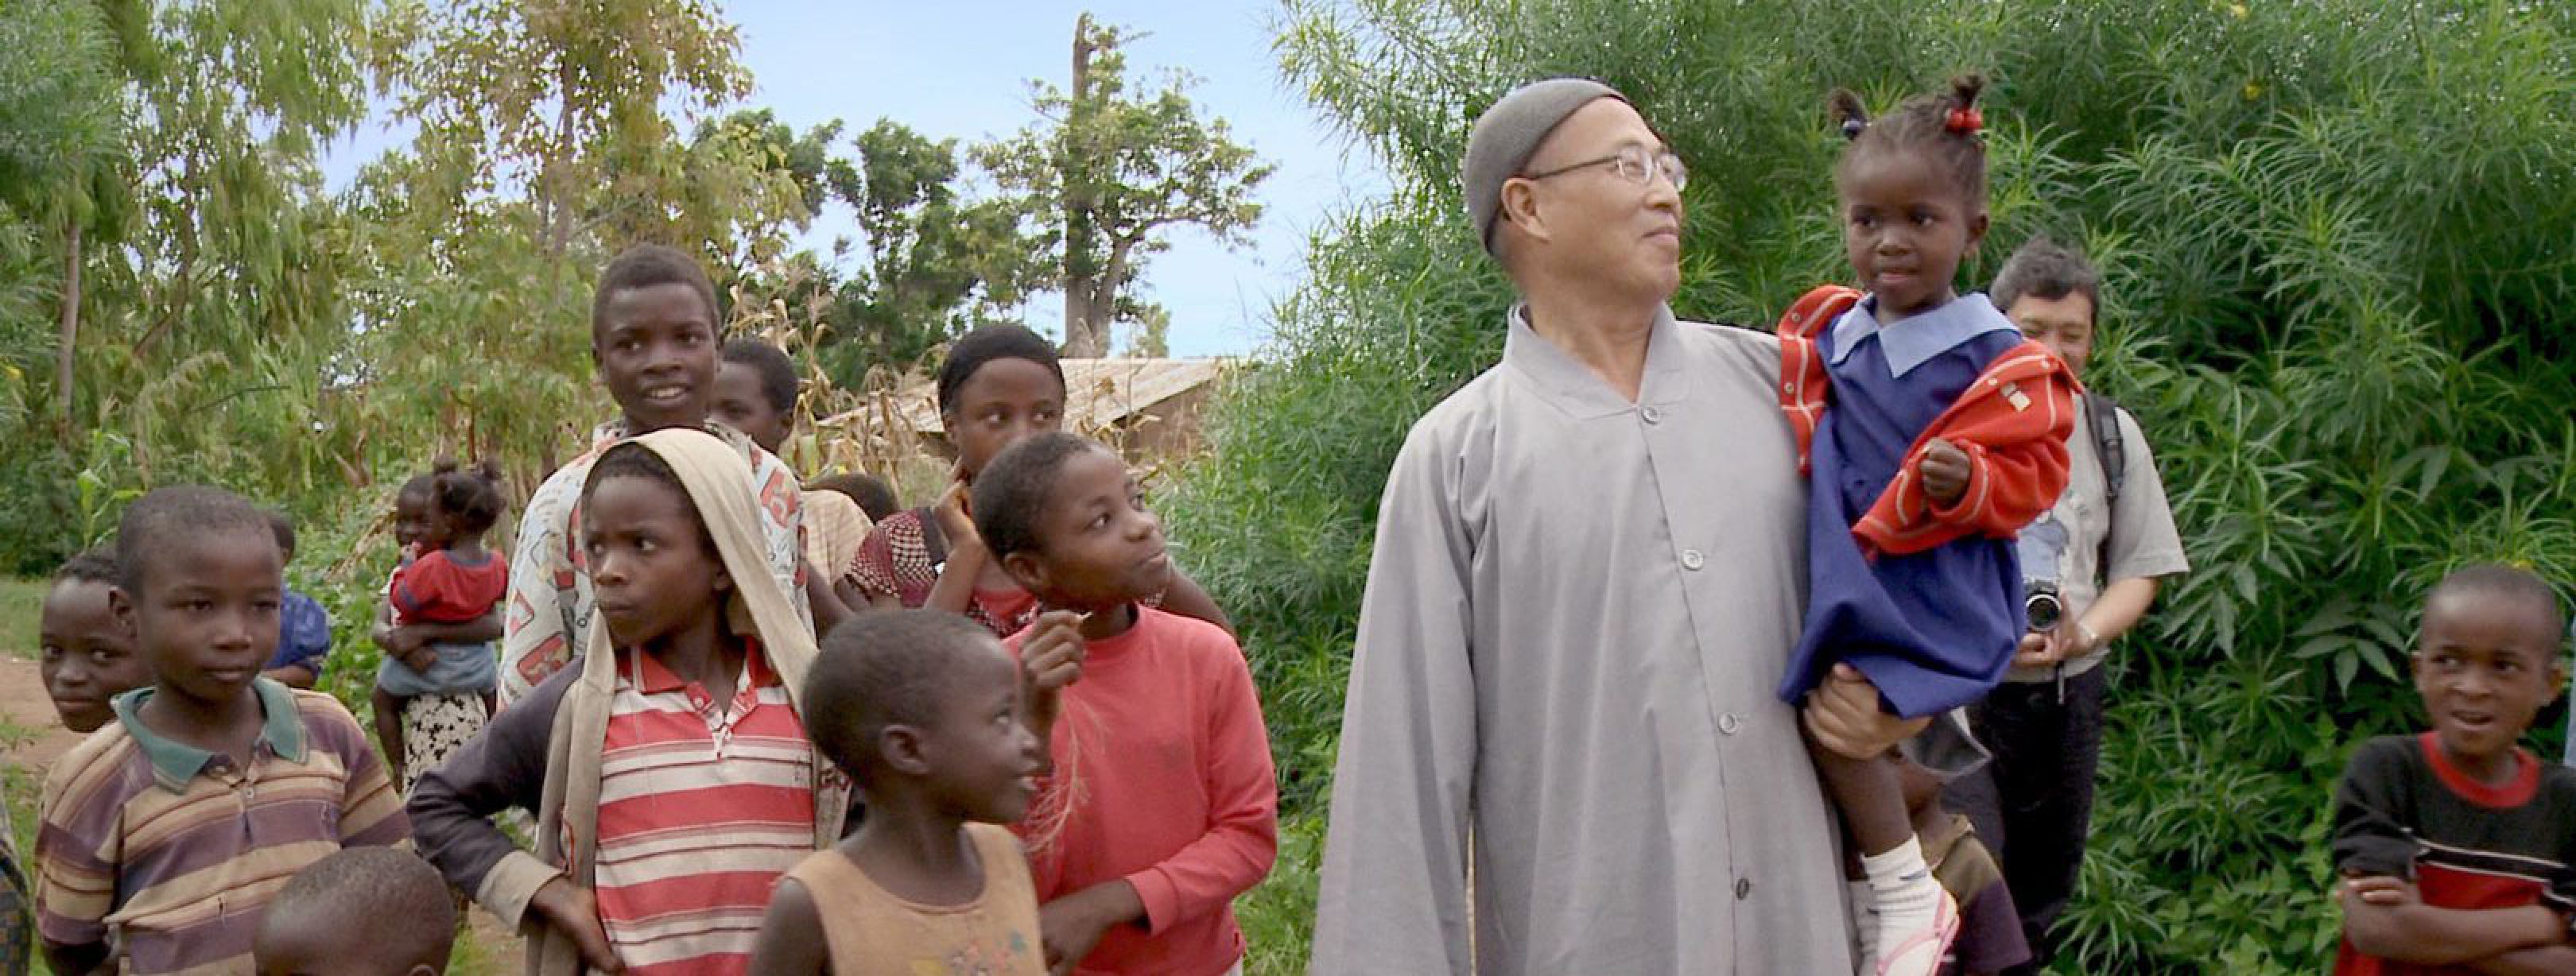 film over boeddhisme in Afrika